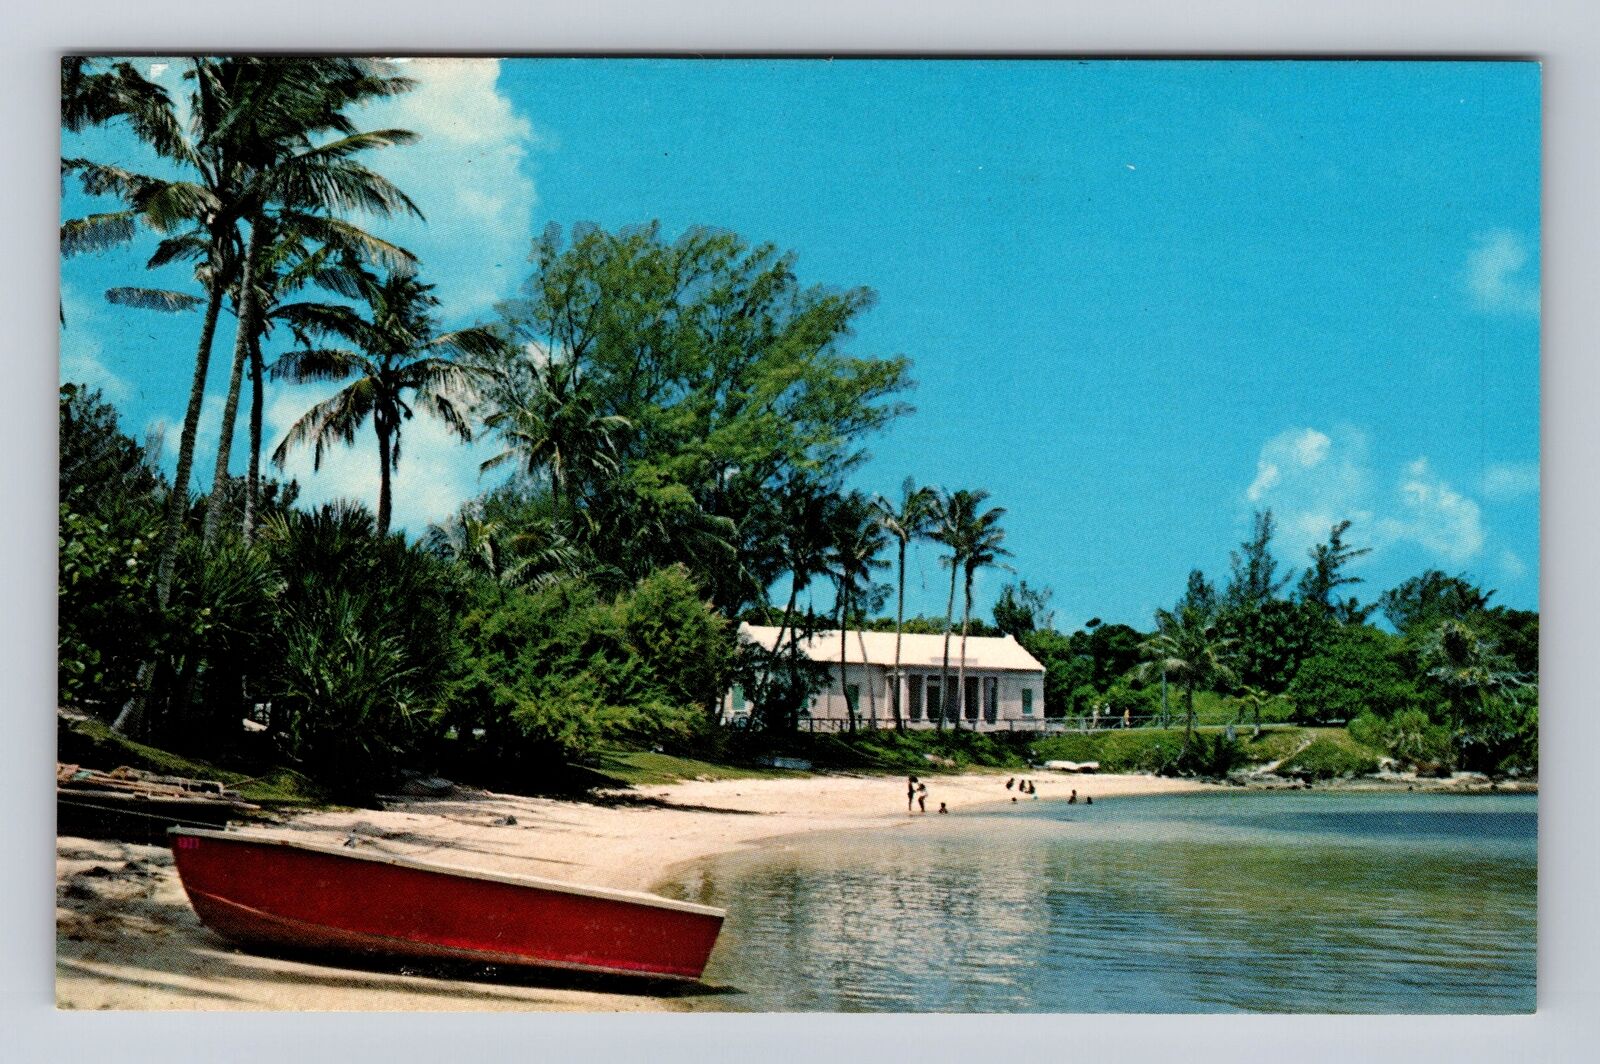 Somerset-Bermuda, Mangrove Bay, Antique Vintage Souvenir Postcard